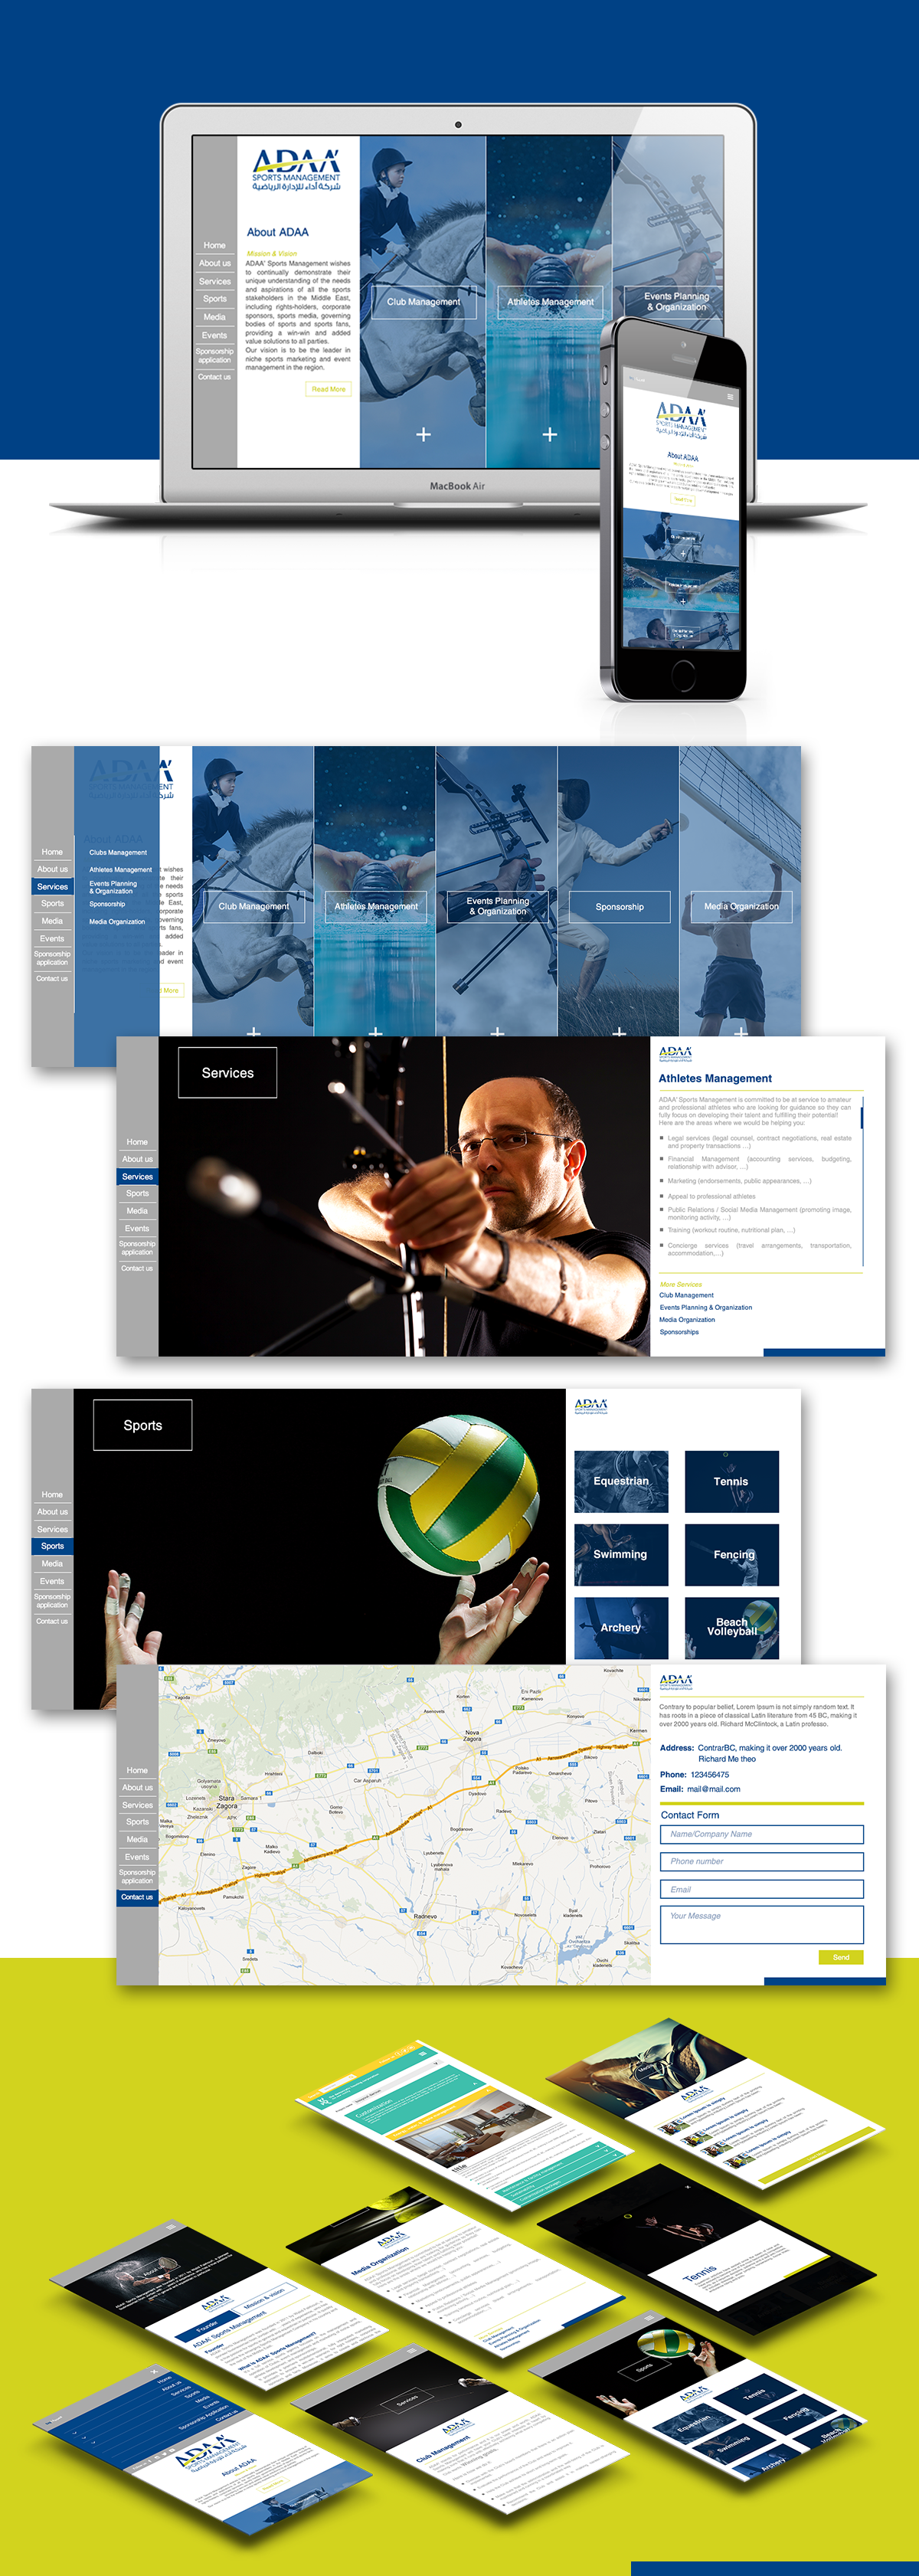 sports management mobile Responsive flat design webiste full screen side menu